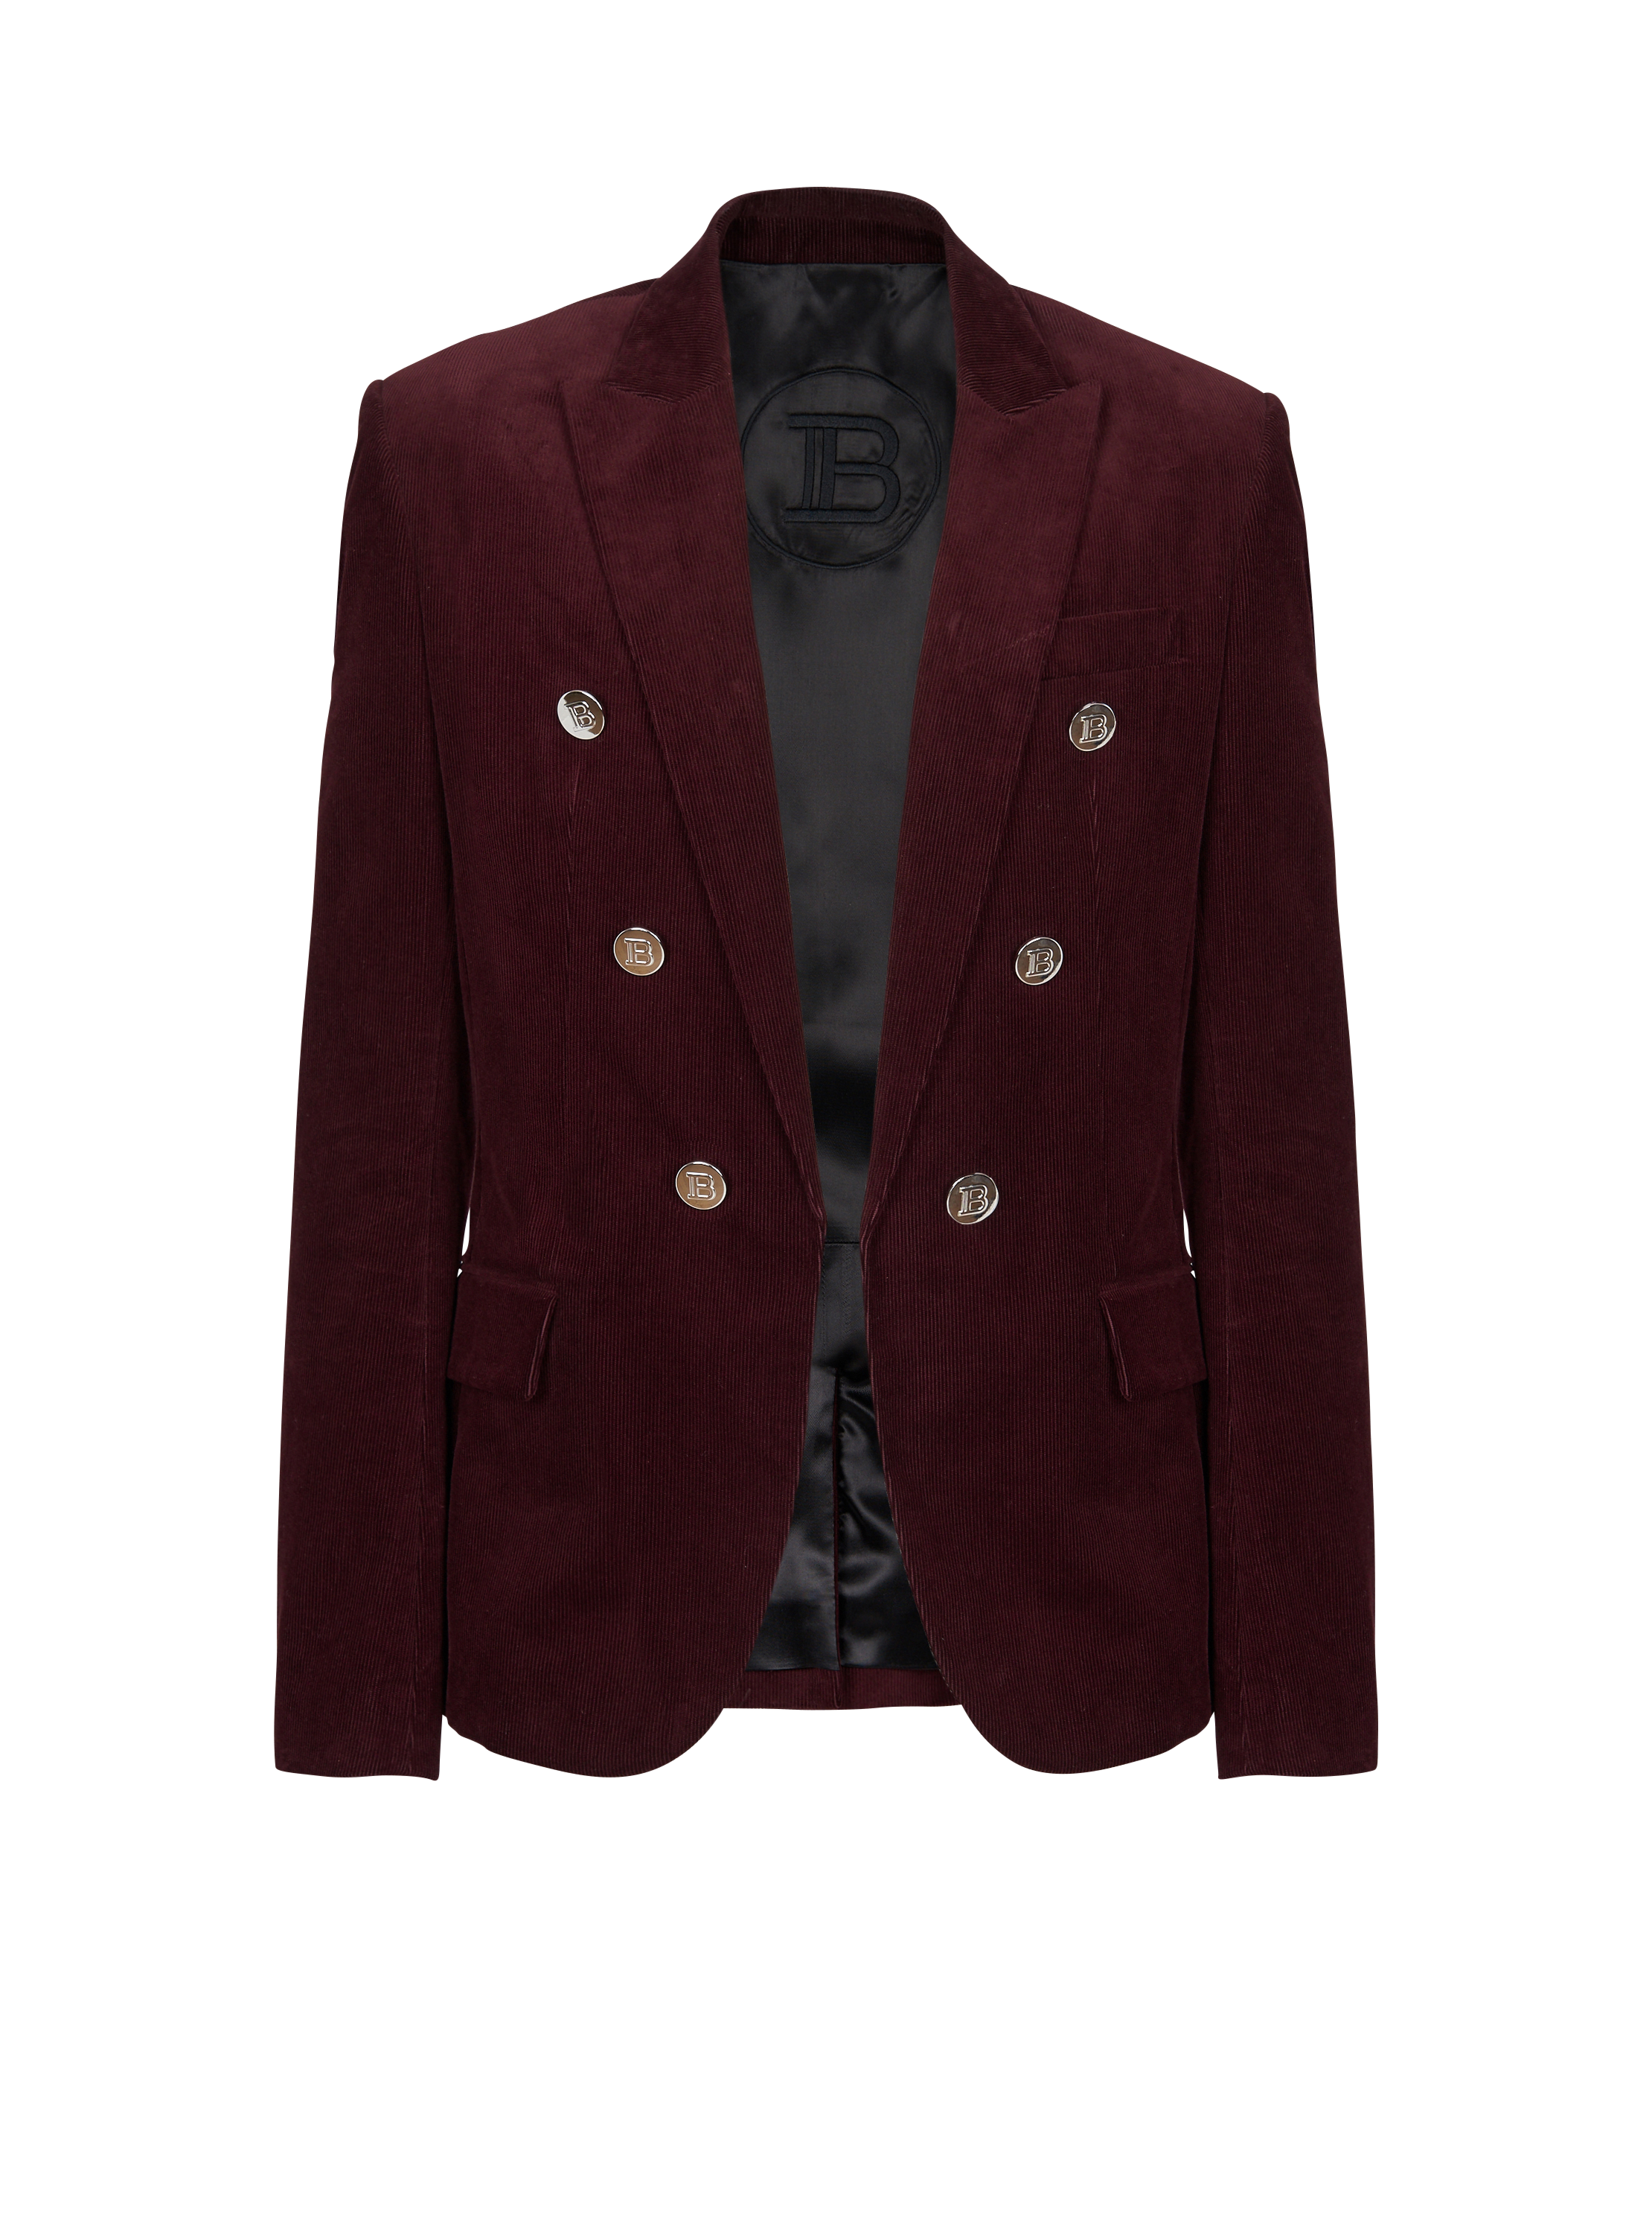 6-button Corduroy jacket, red, hi-res